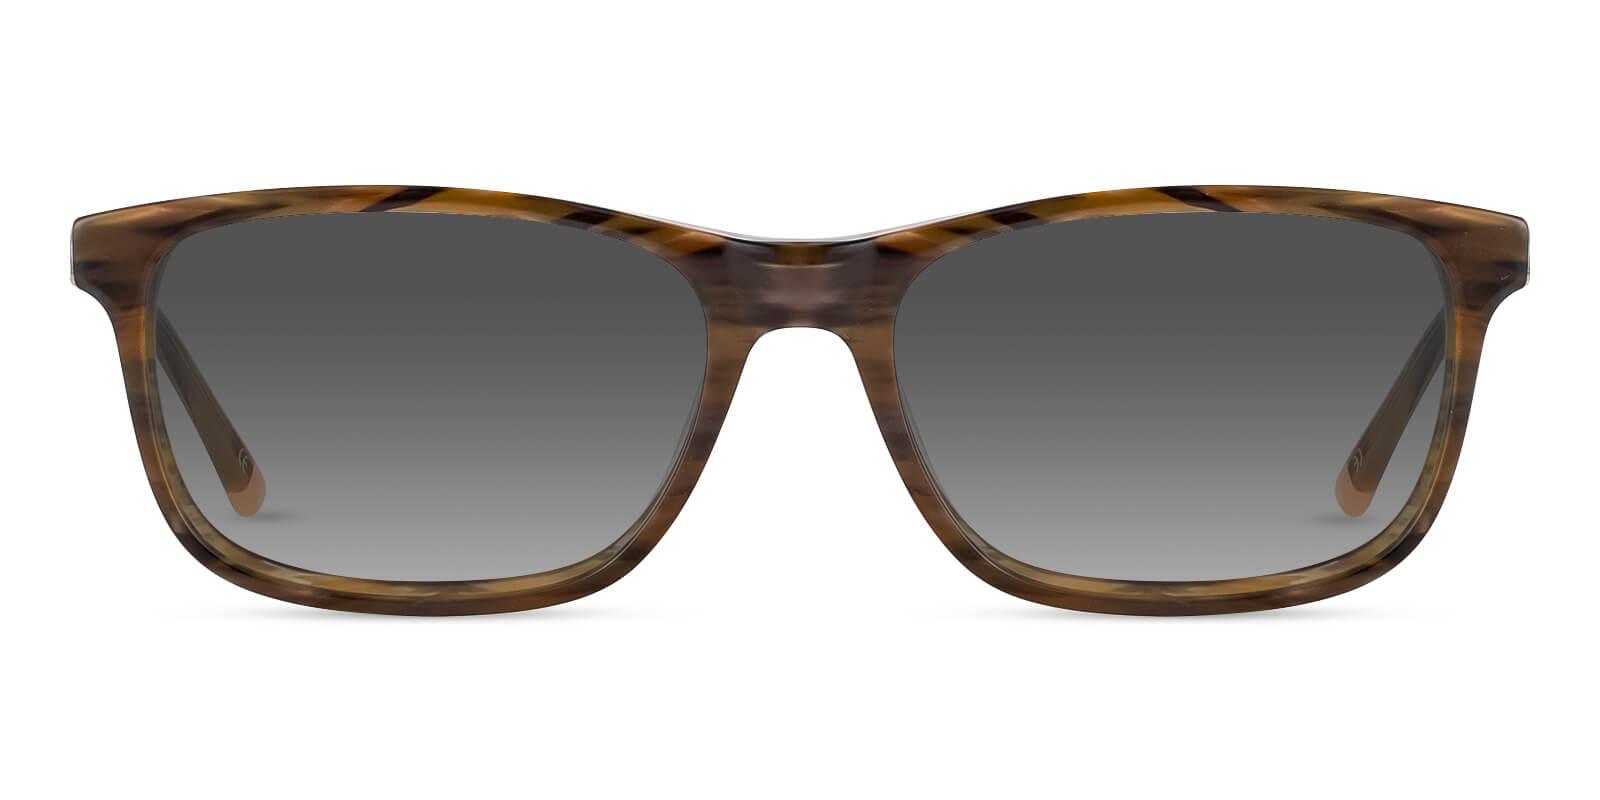 Candela Striped Acetate SpringHinges , Sunglasses , UniversalBridgeFit Frames from ABBE Glasses